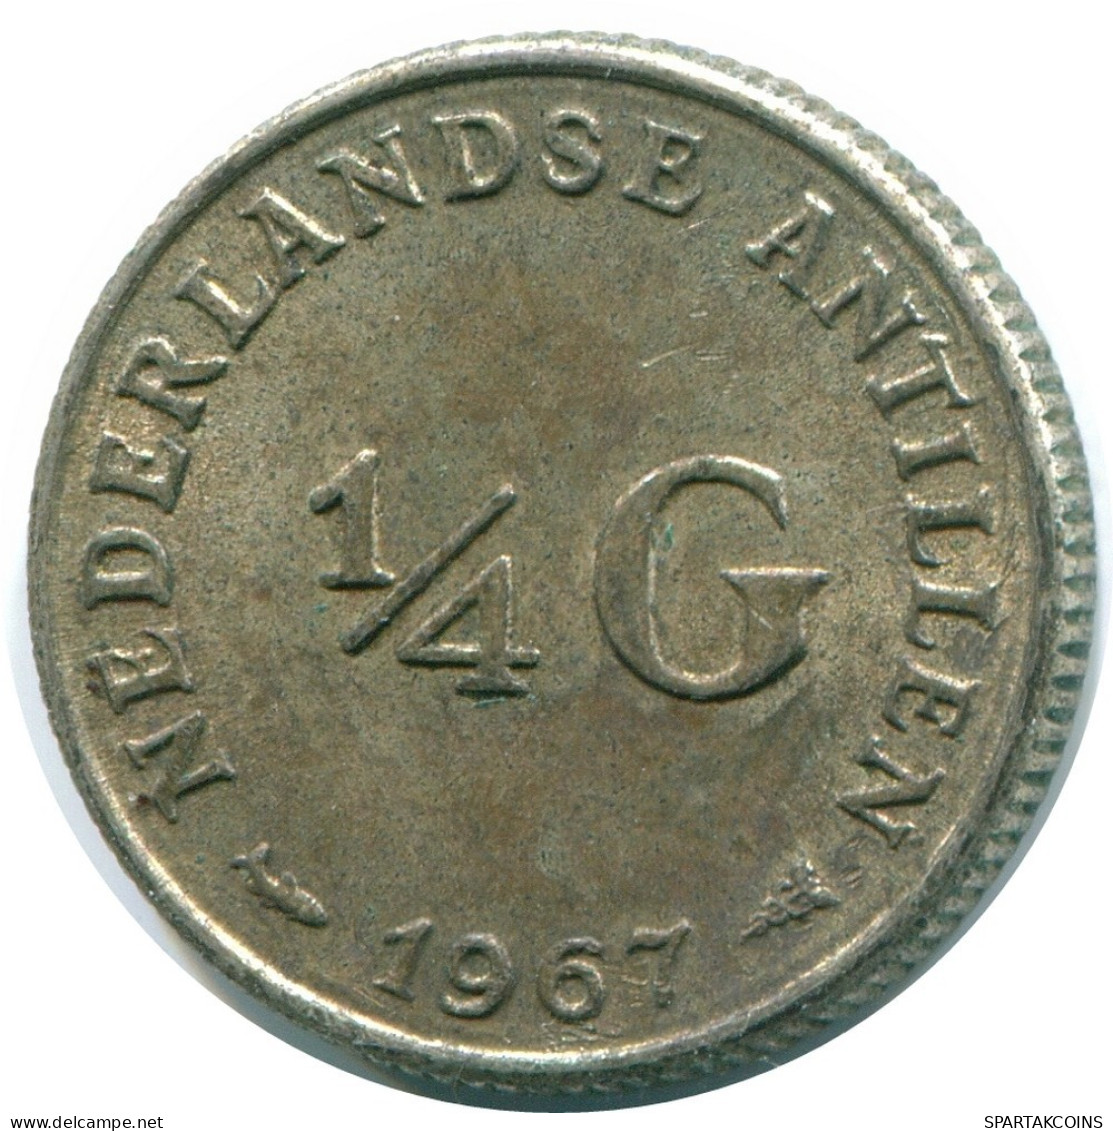 1/4 GULDEN 1967 NIEDERLÄNDISCHE ANTILLEN SILBER Koloniale Münze #NL11513.4.D.A - Netherlands Antilles